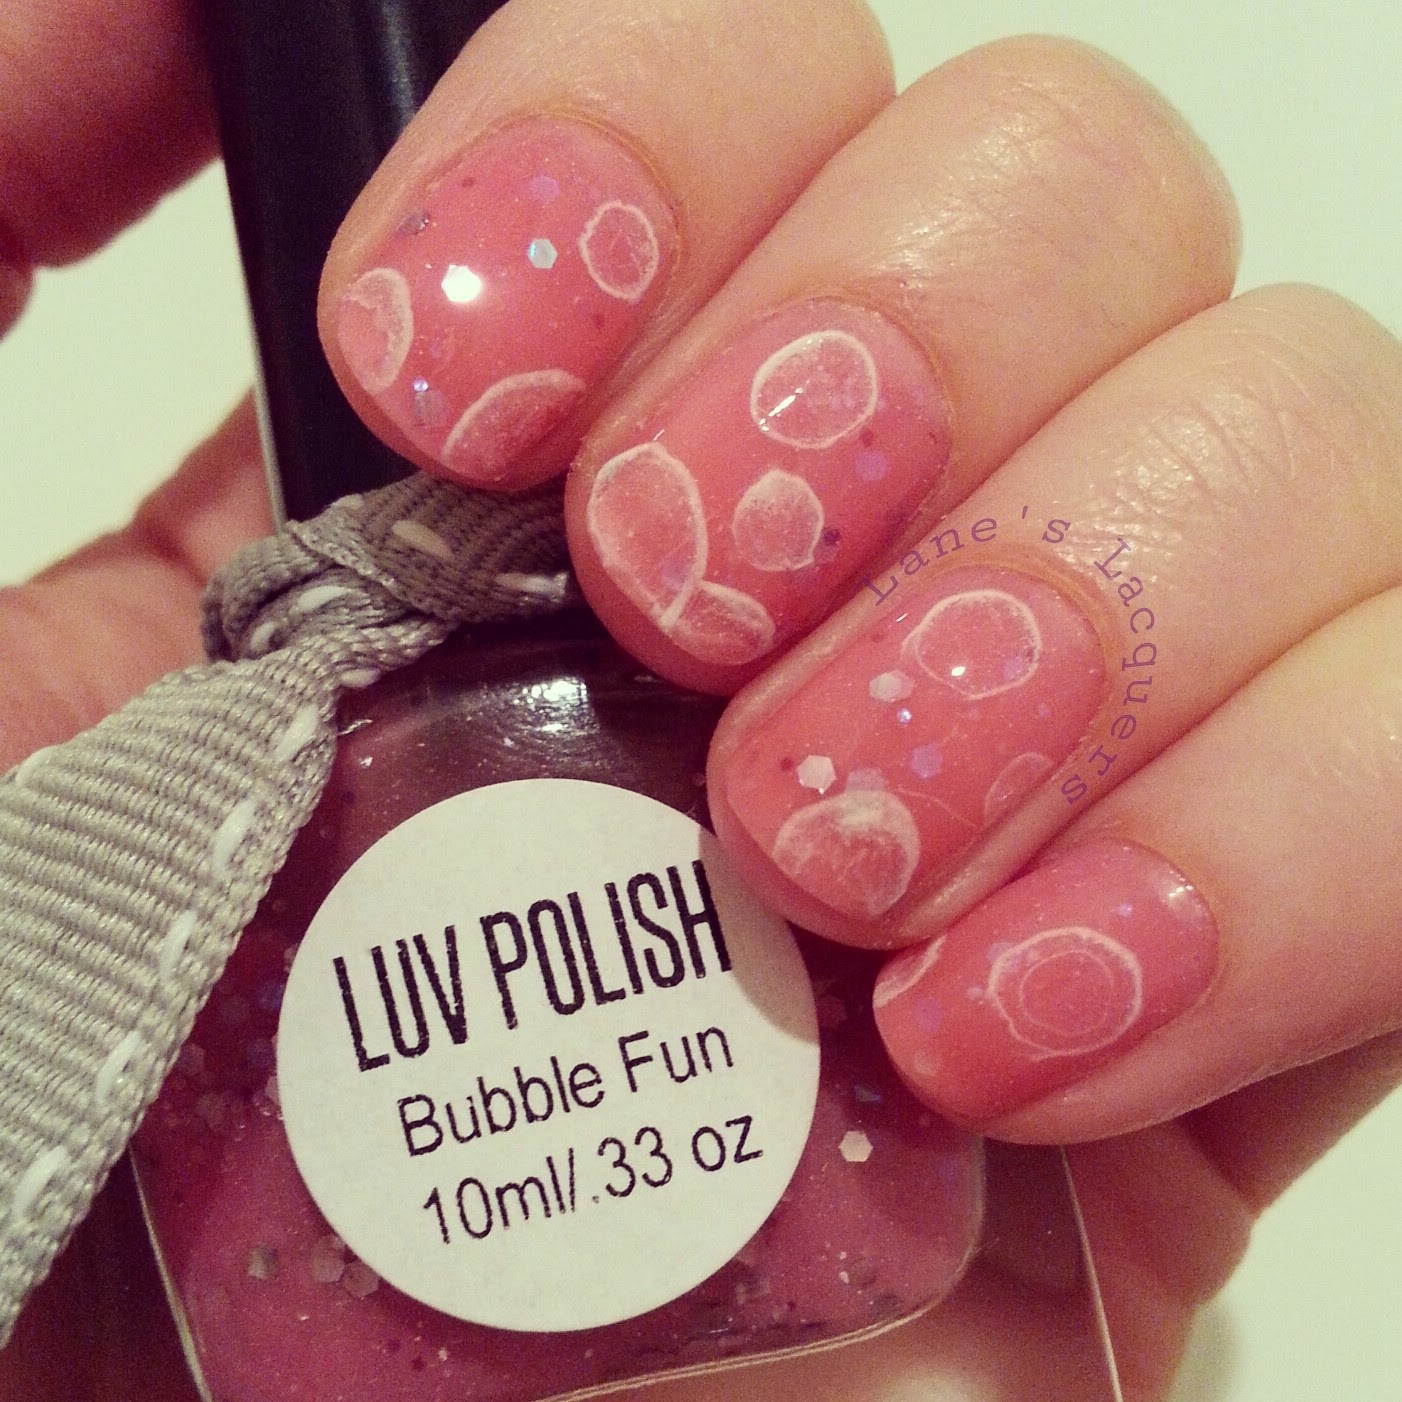 luv-polish-bubble-fun-swatch-bubble-nails